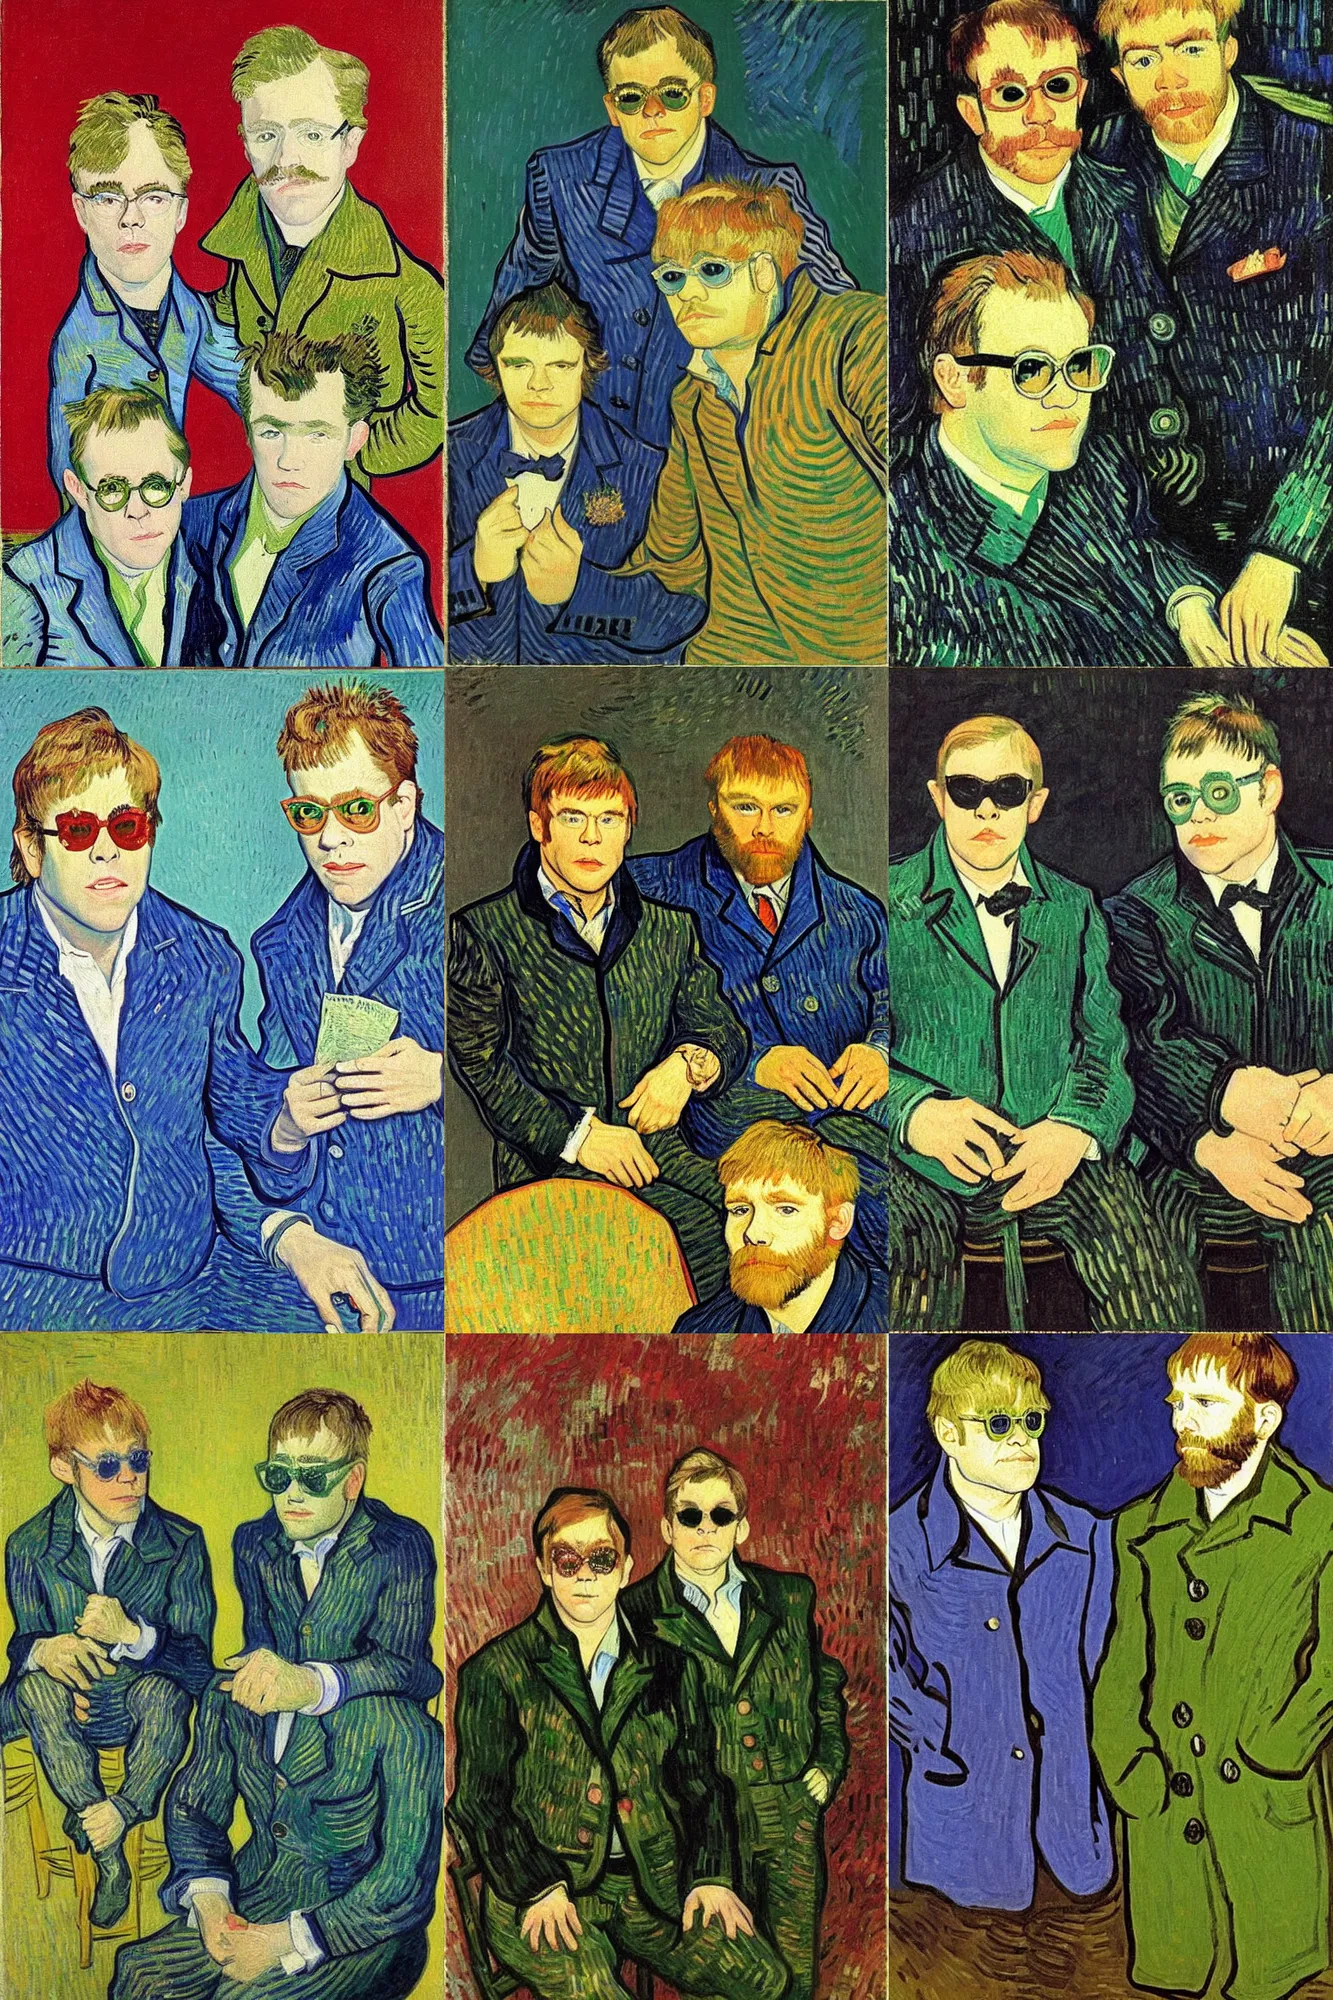 Prompt: Portrait of Elton John and John reid in 1970 by Van gogh